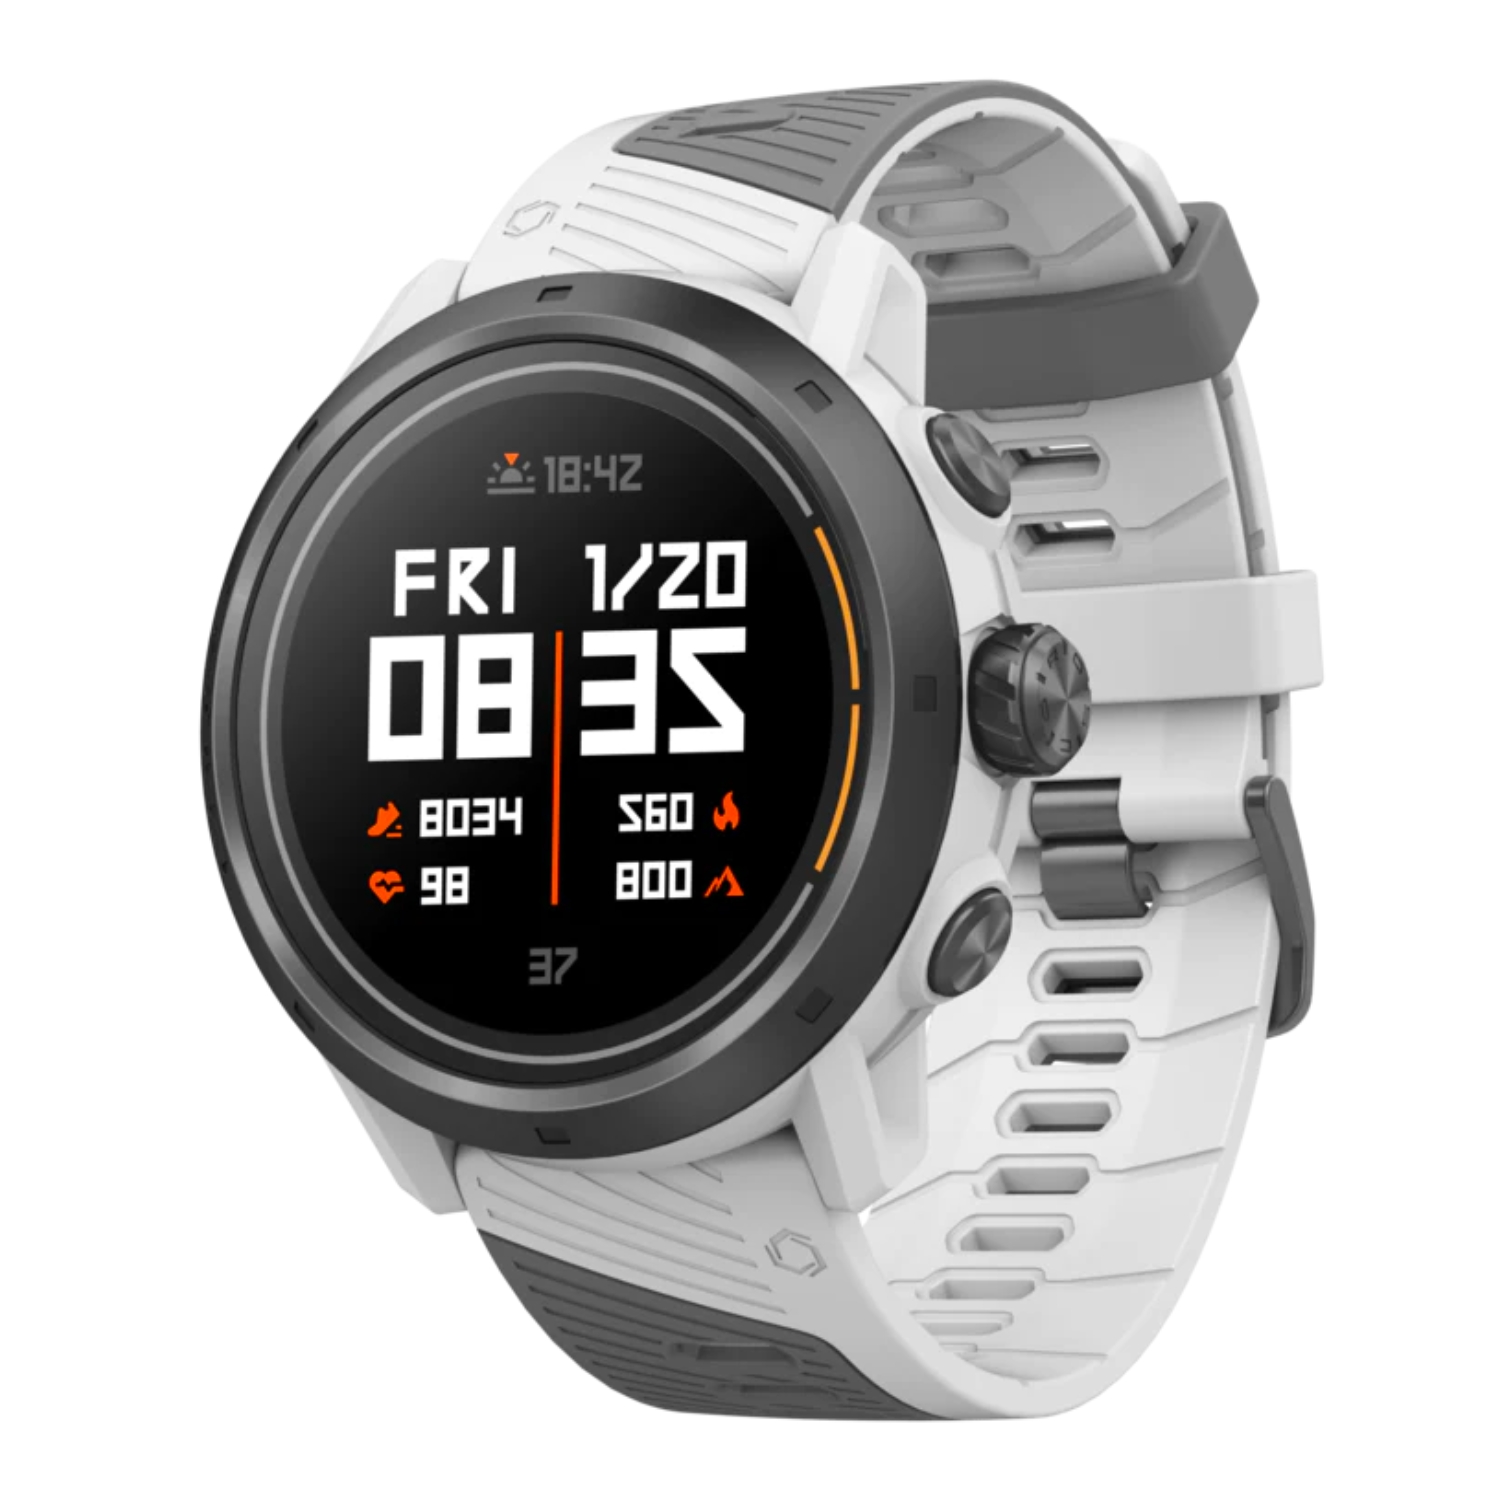 Đồng hồ GPS thể thao Coros Apex 2 Pro - Kilian Jornet Edition